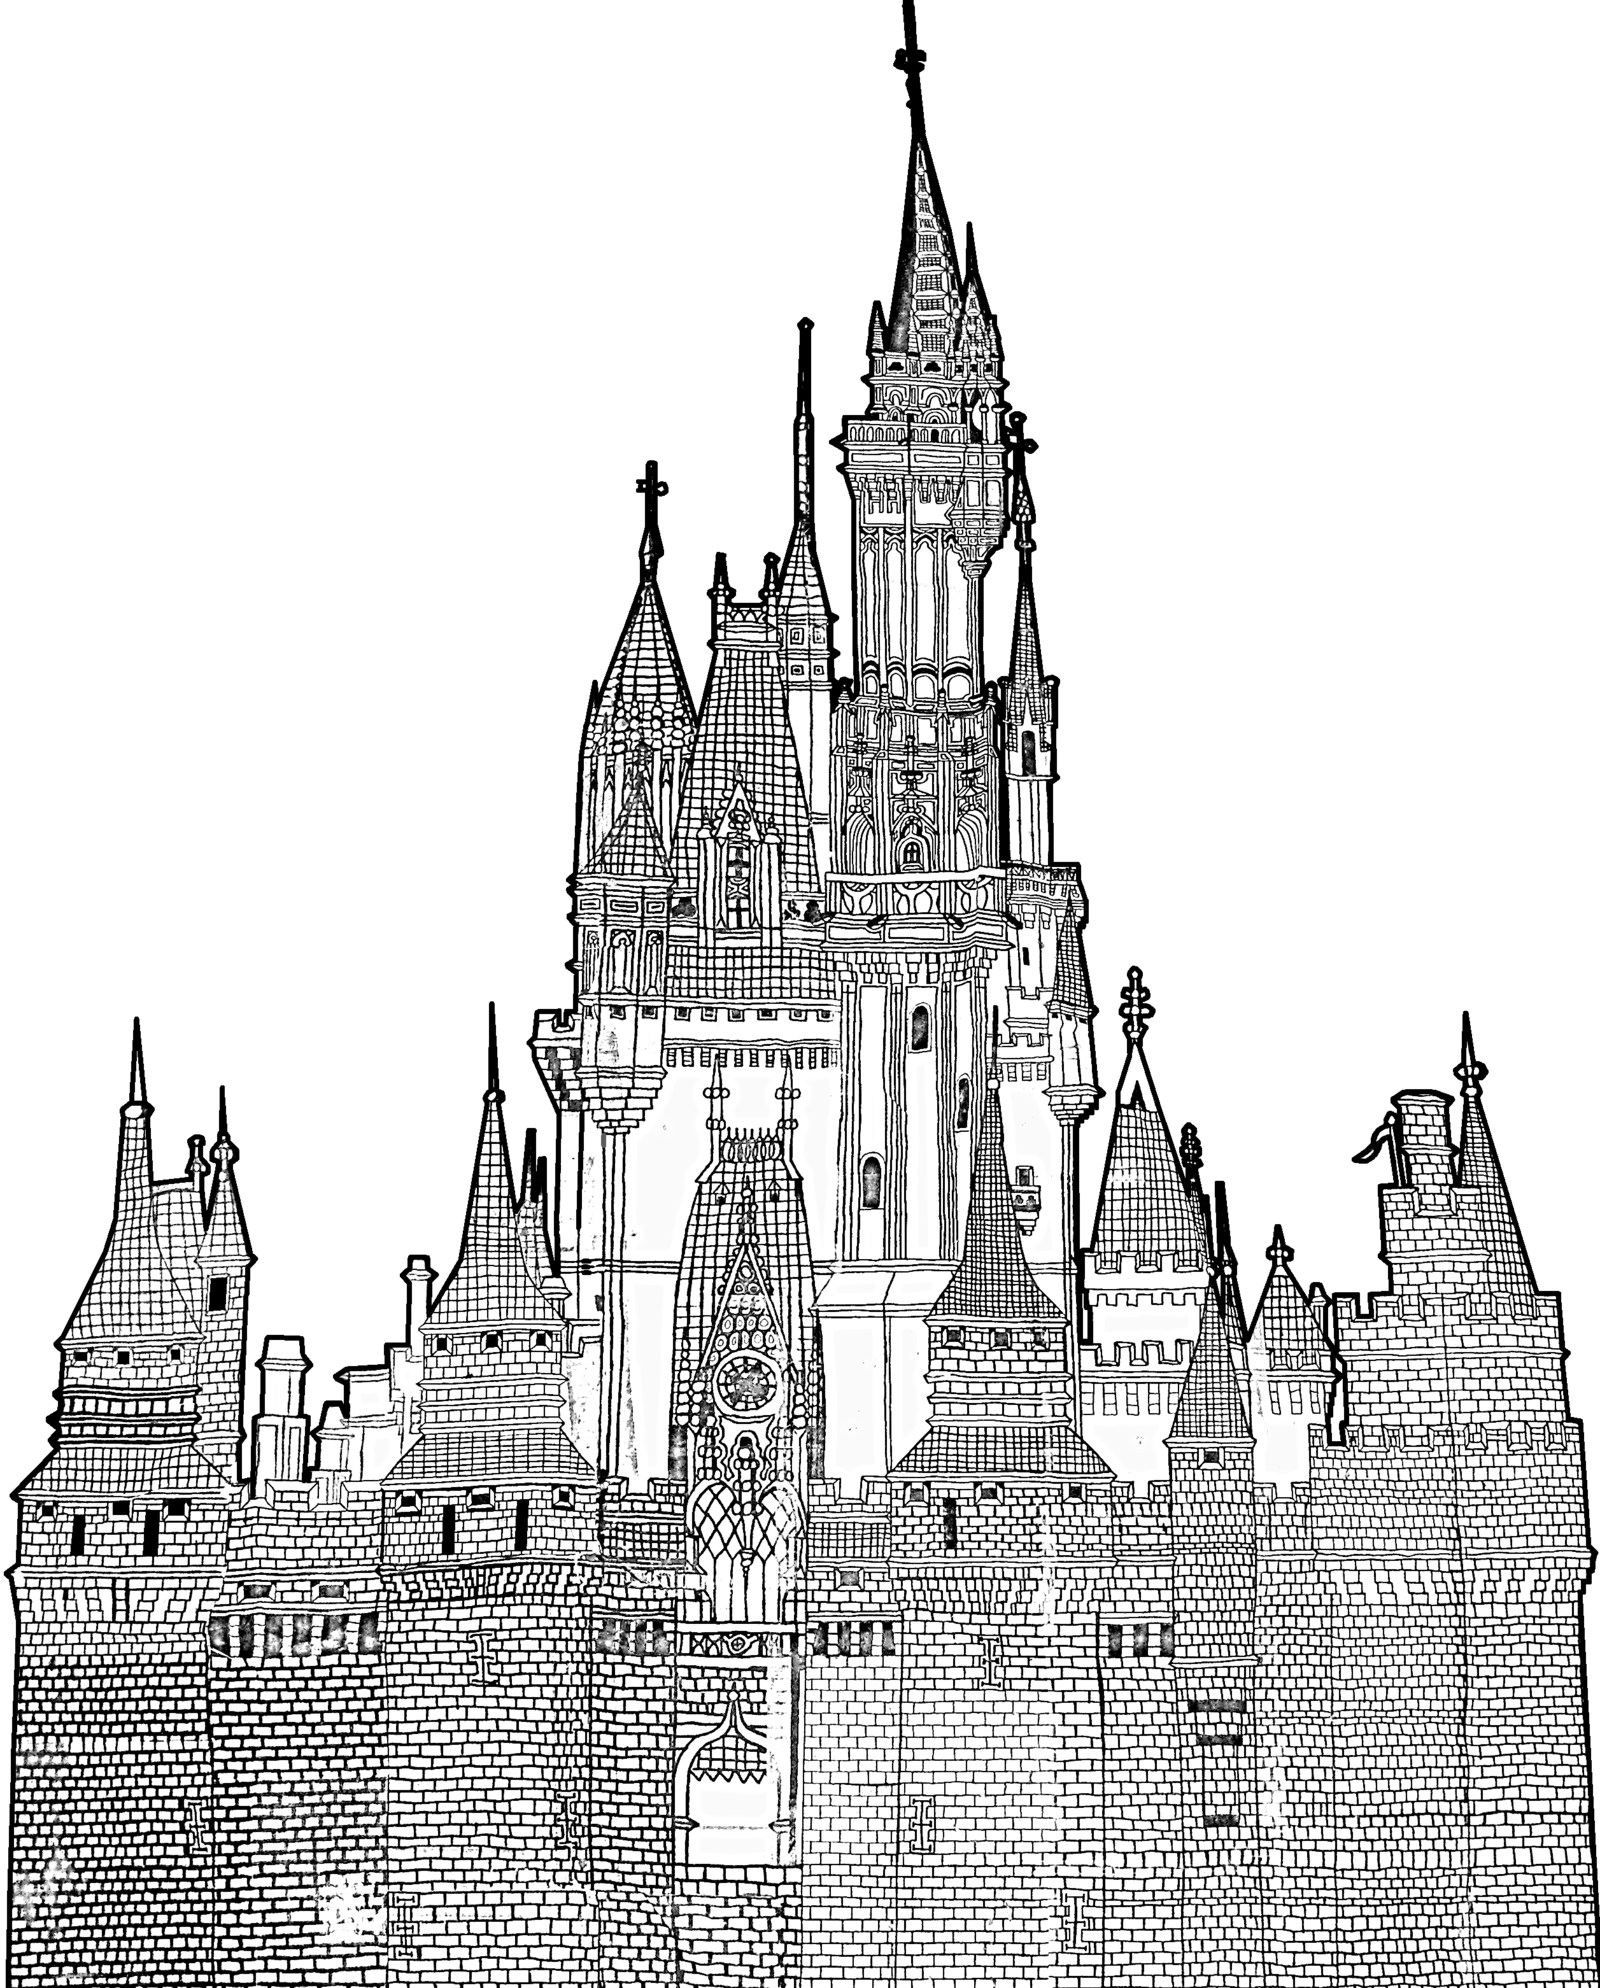 Cinderellas Castle Drawing at Explore collection